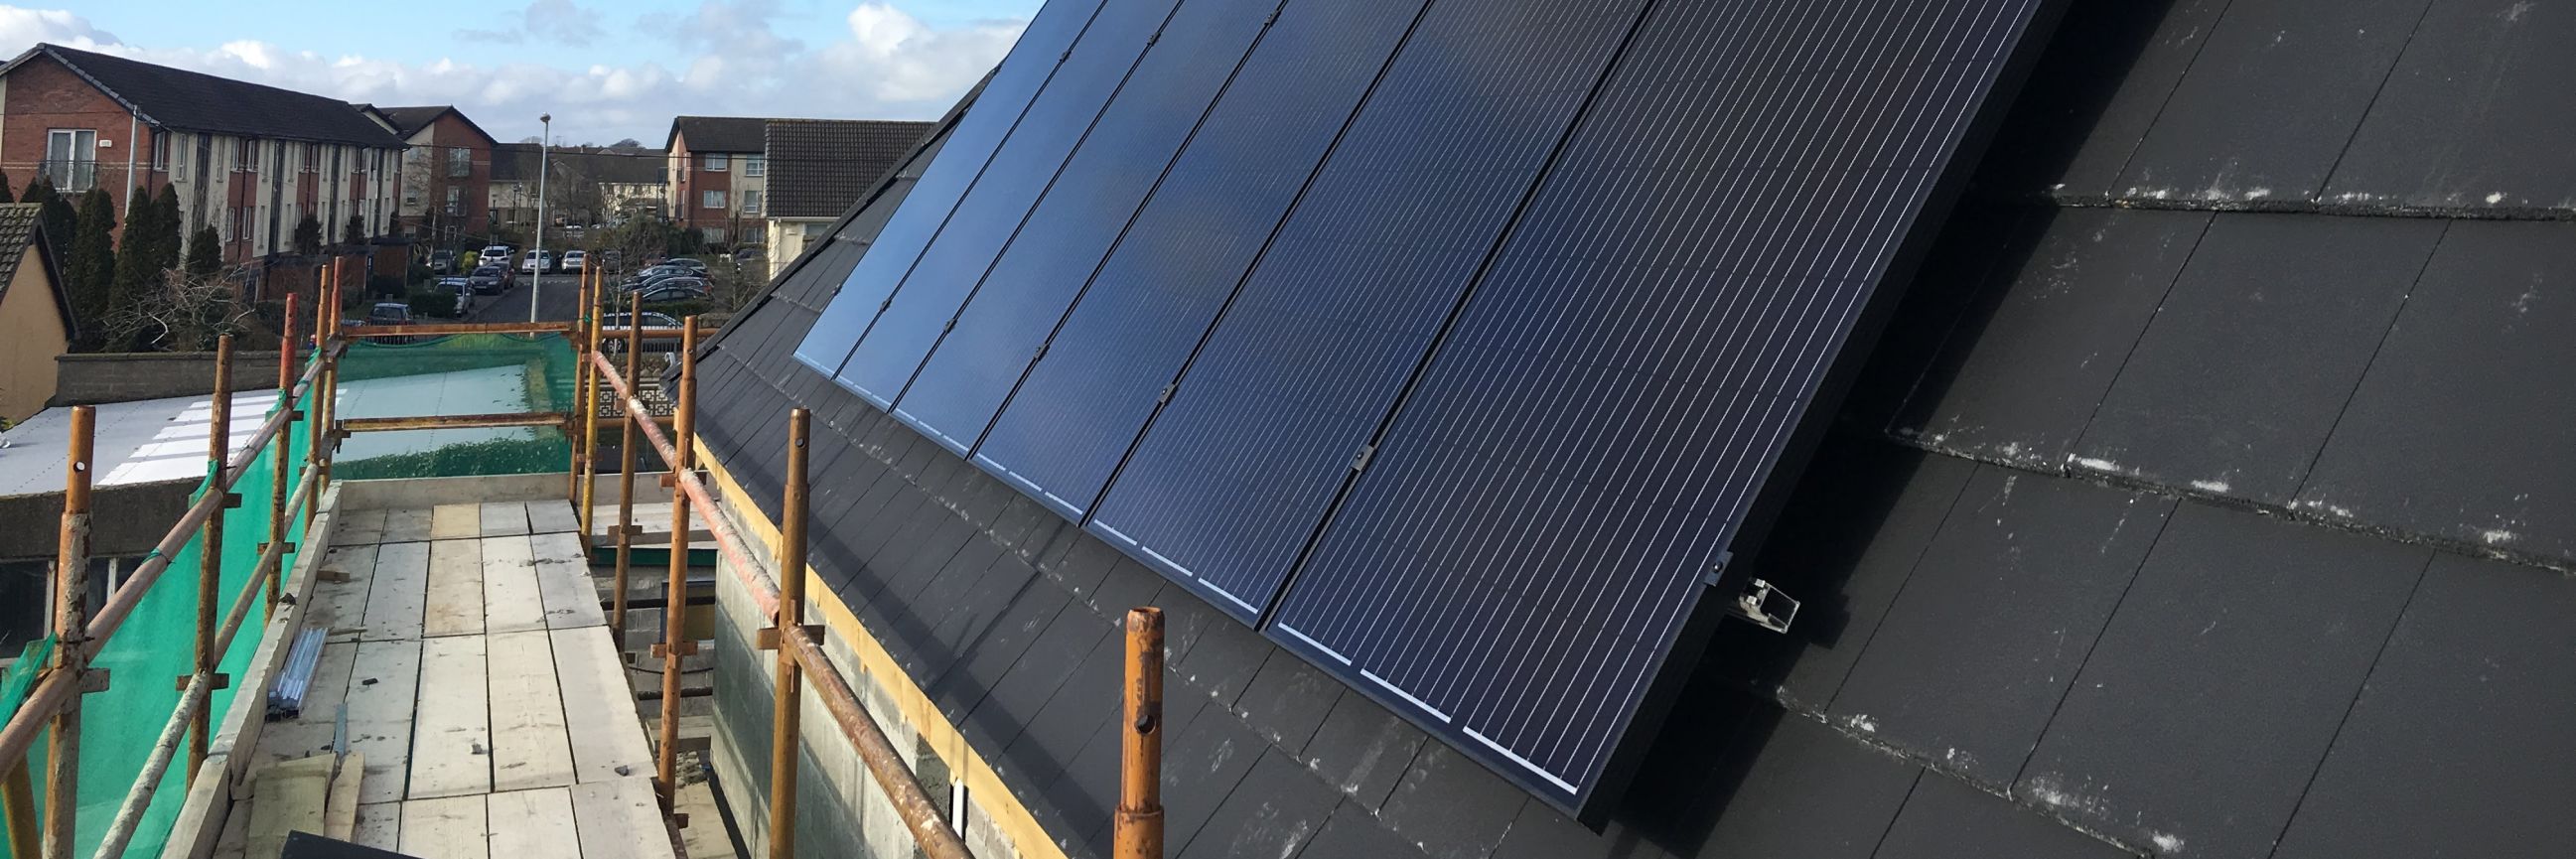 Solar panels above scaffolds